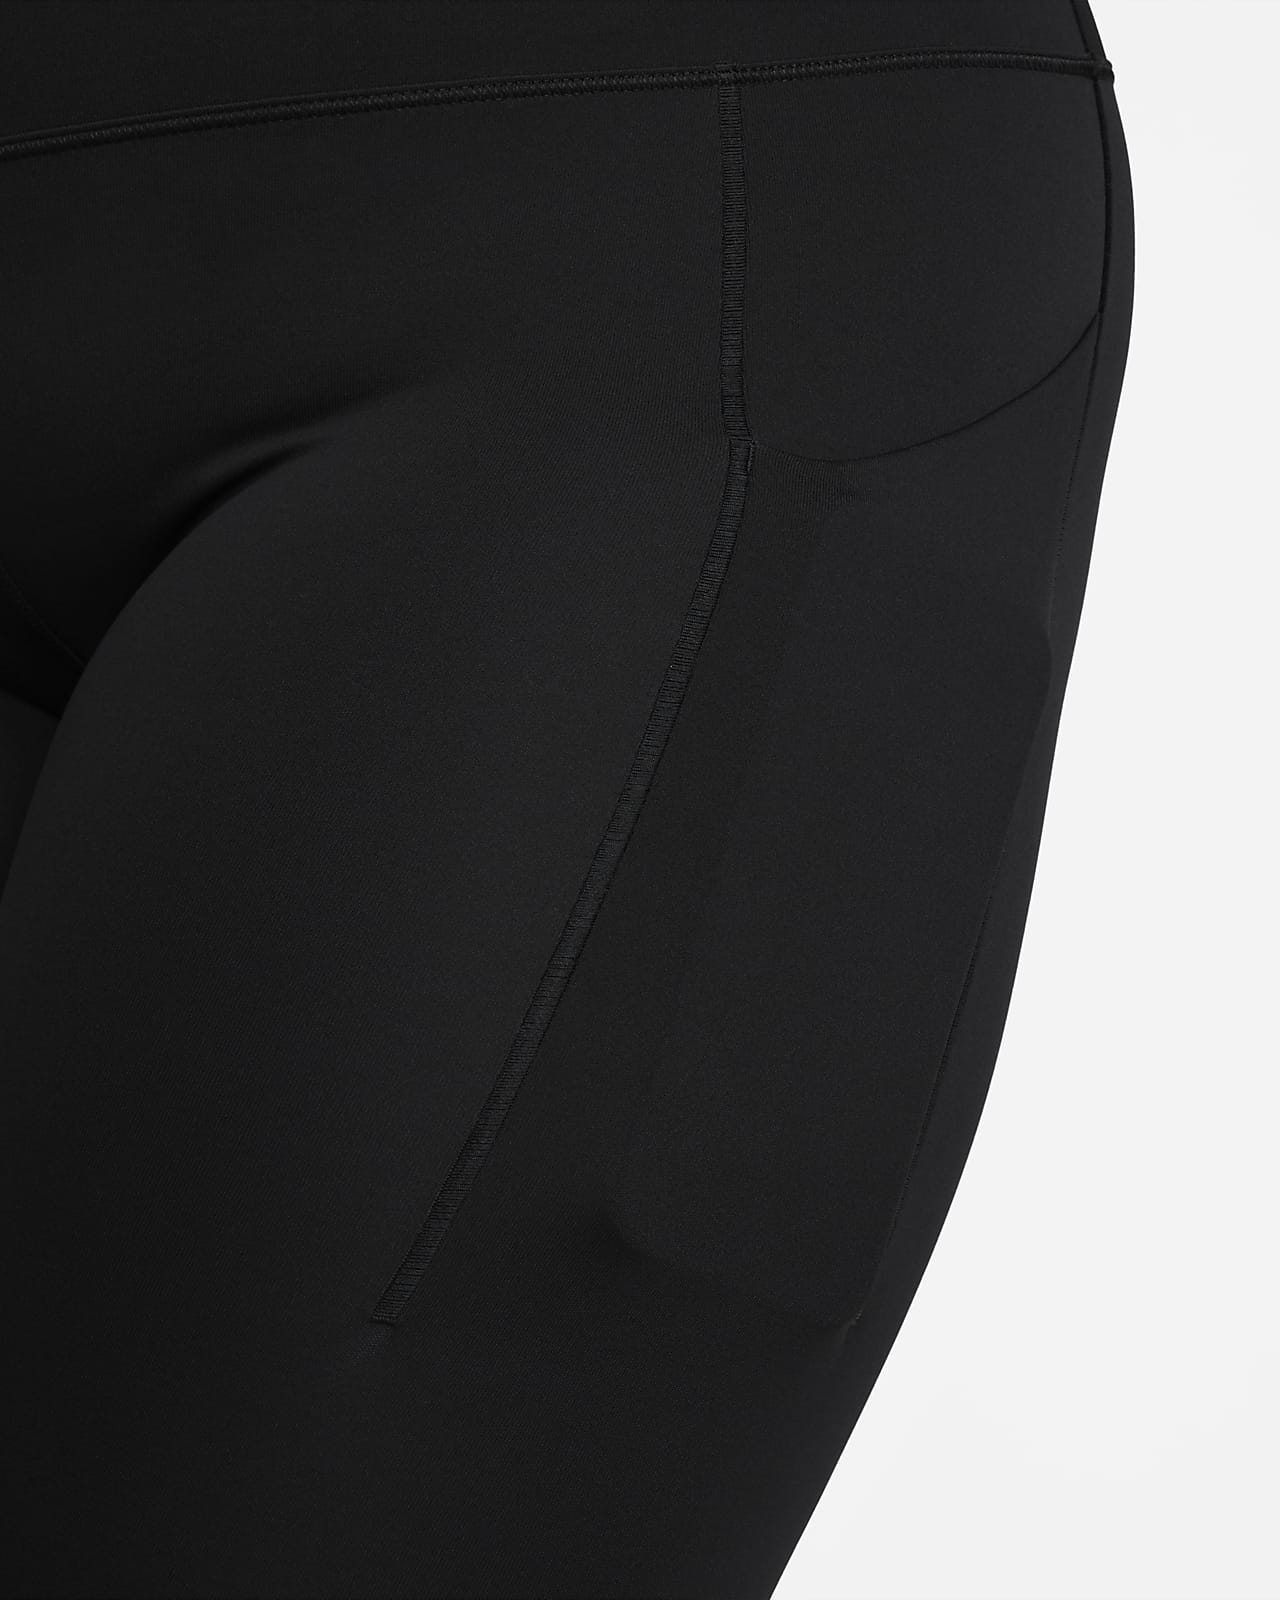 Nike Universa Women's Medium-Support Mid-Rise 7/8 Leggings with Pockets.